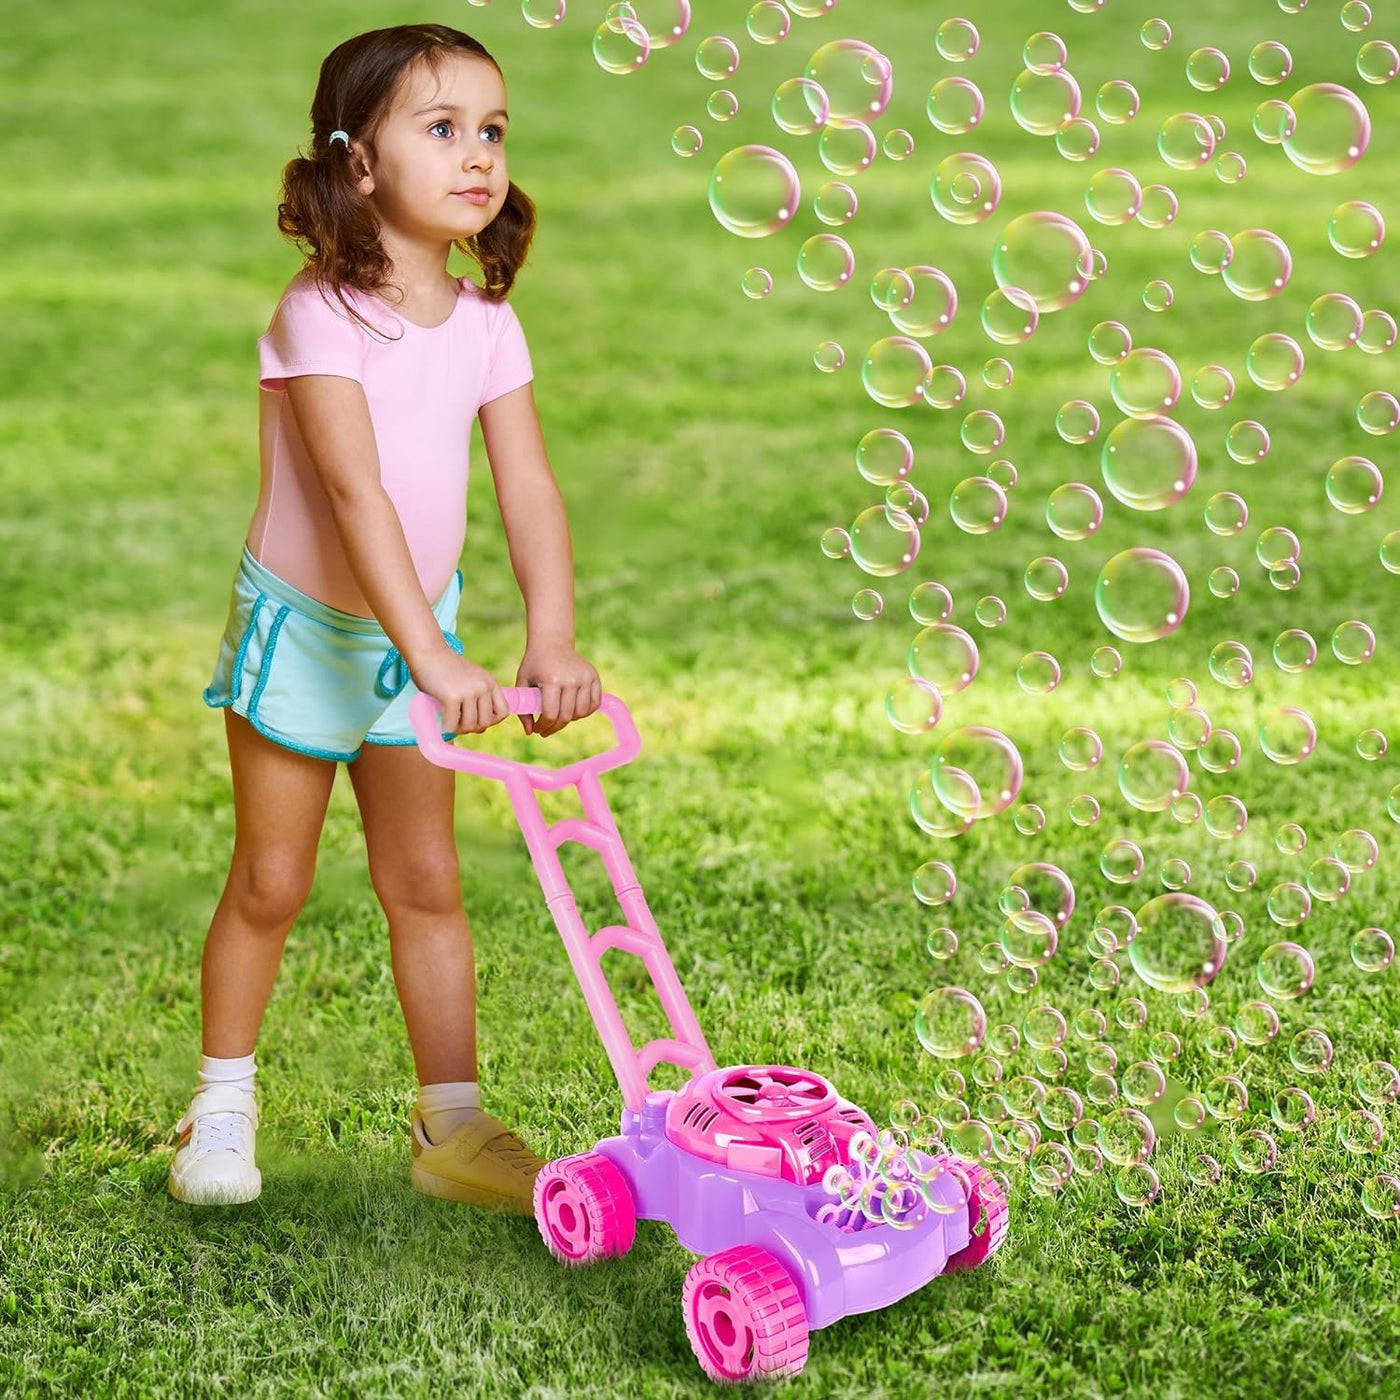 Mower Bubble Machine Green, Toys \ Bubbles